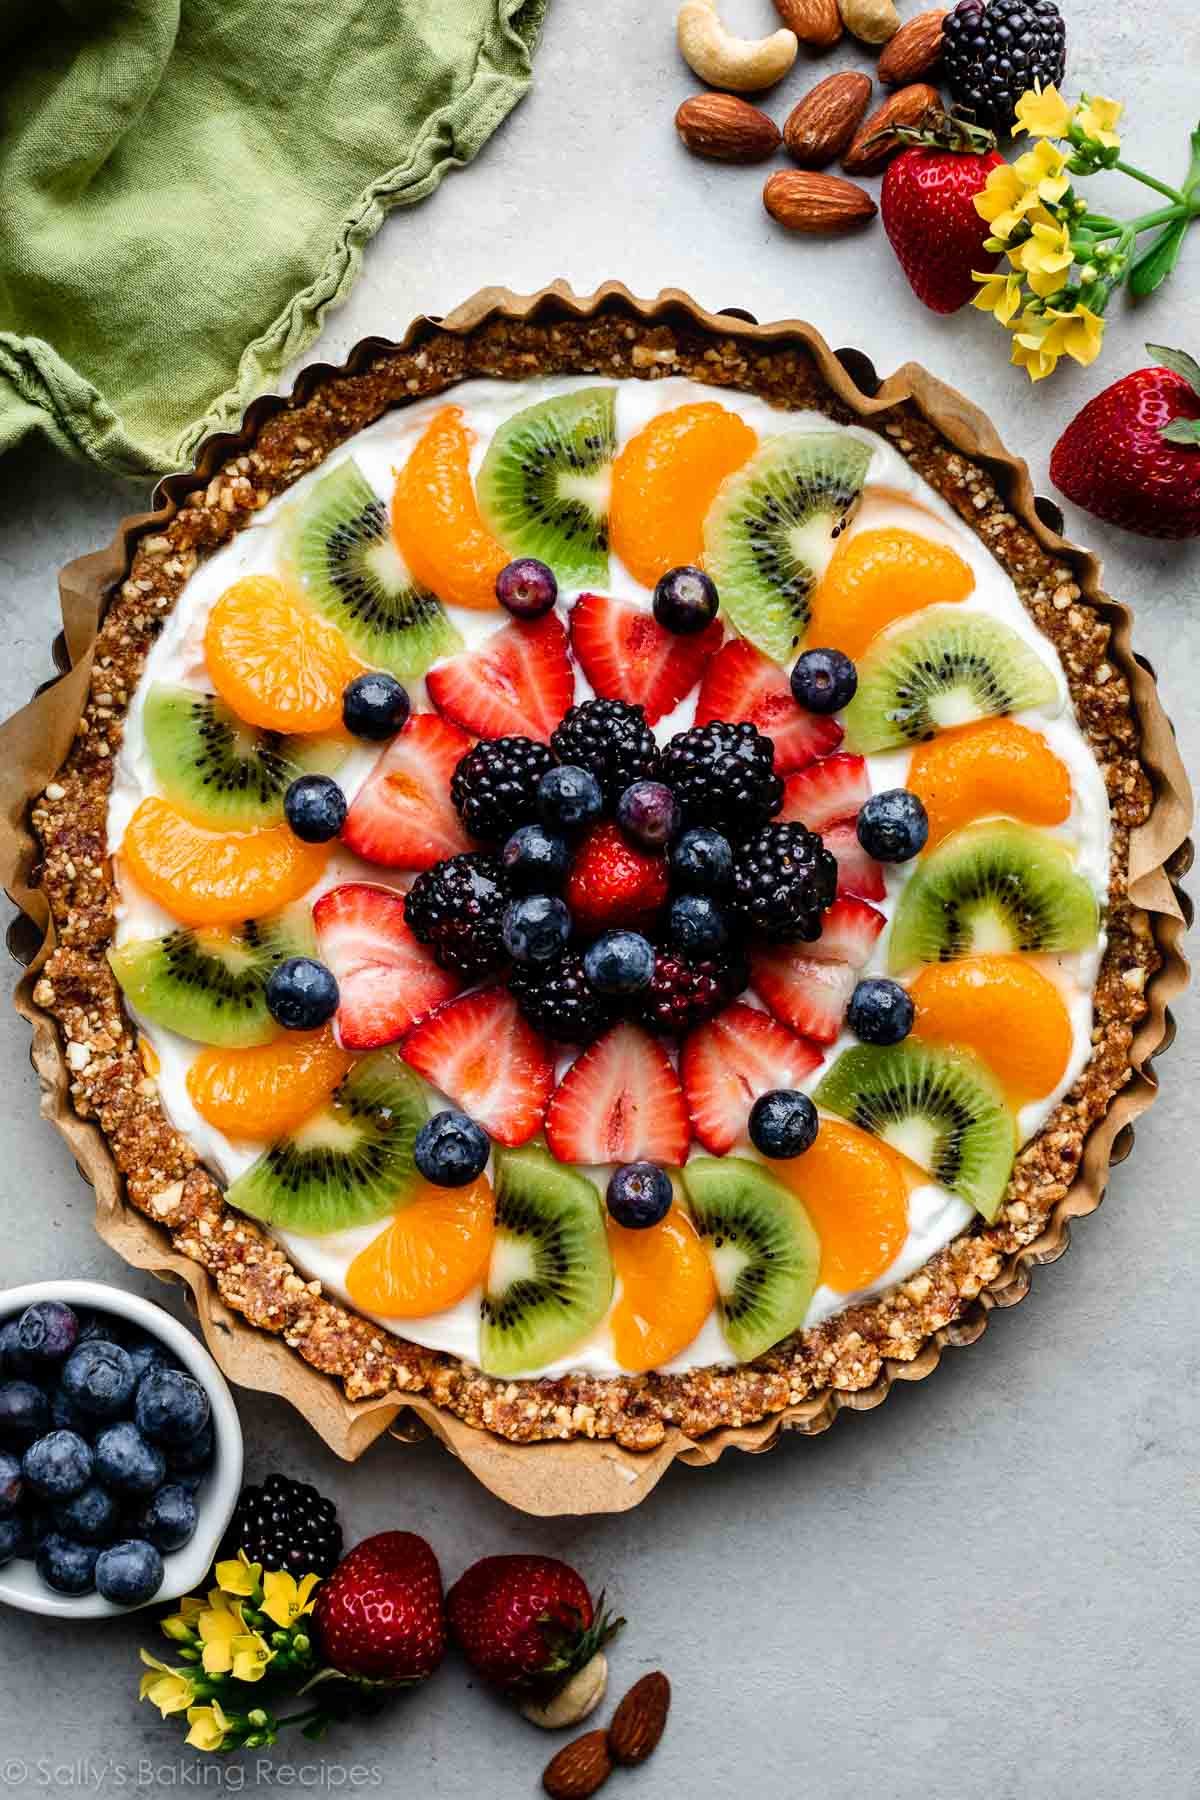 no bake fruit tart with yogurt inside tart pan on gray backdrop with strawberries and blueberries around it.